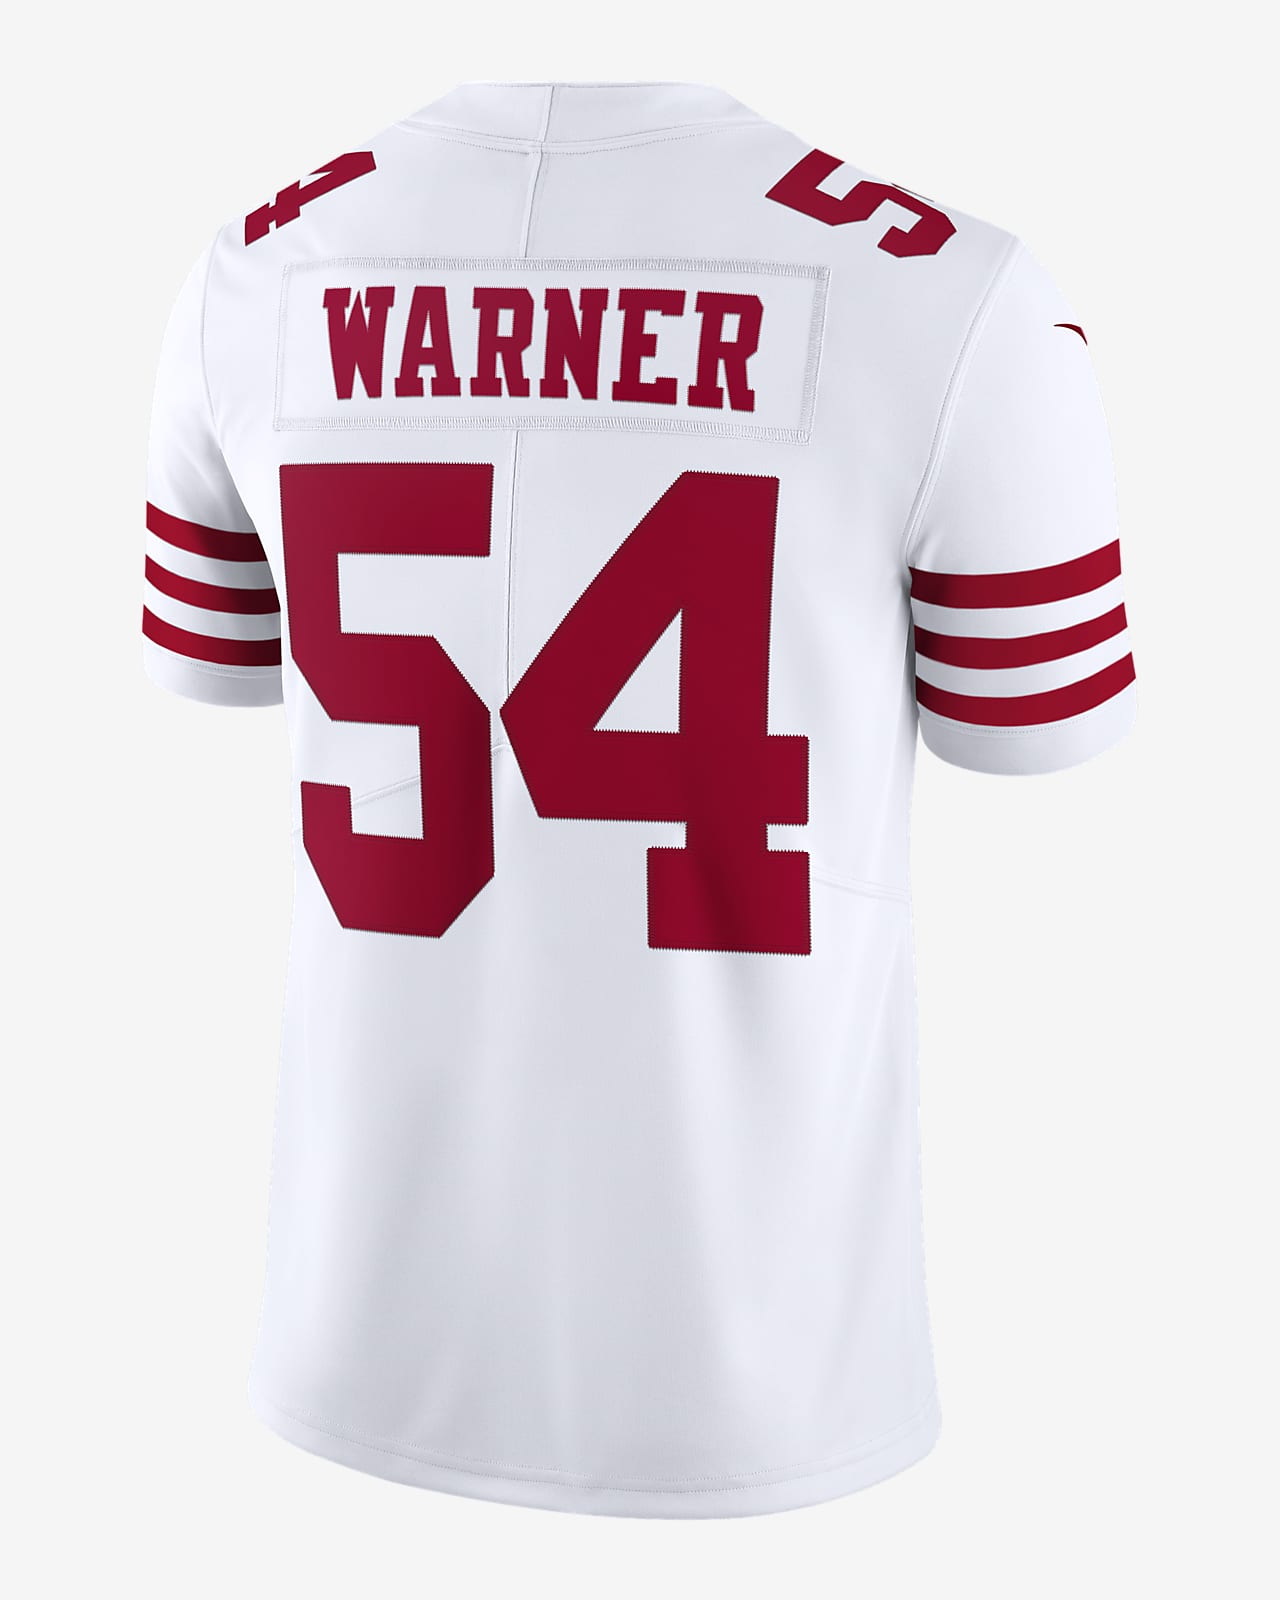 سيجار كوبي للبيع NFL San Francisco 49ers Nike Vapor Untouchable (Fred Warner) Men's ... سيجار كوبي للبيع